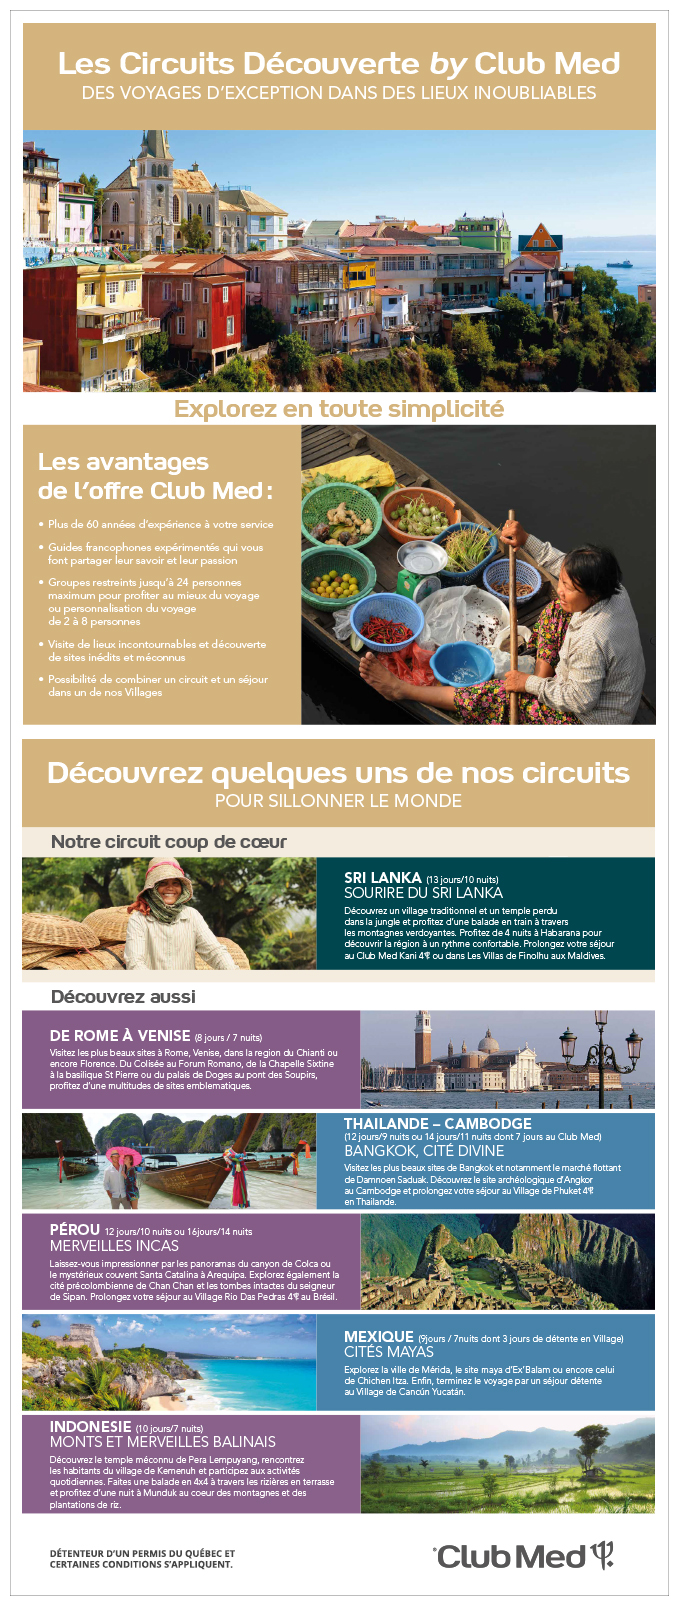 Club Med Circuits découvertes